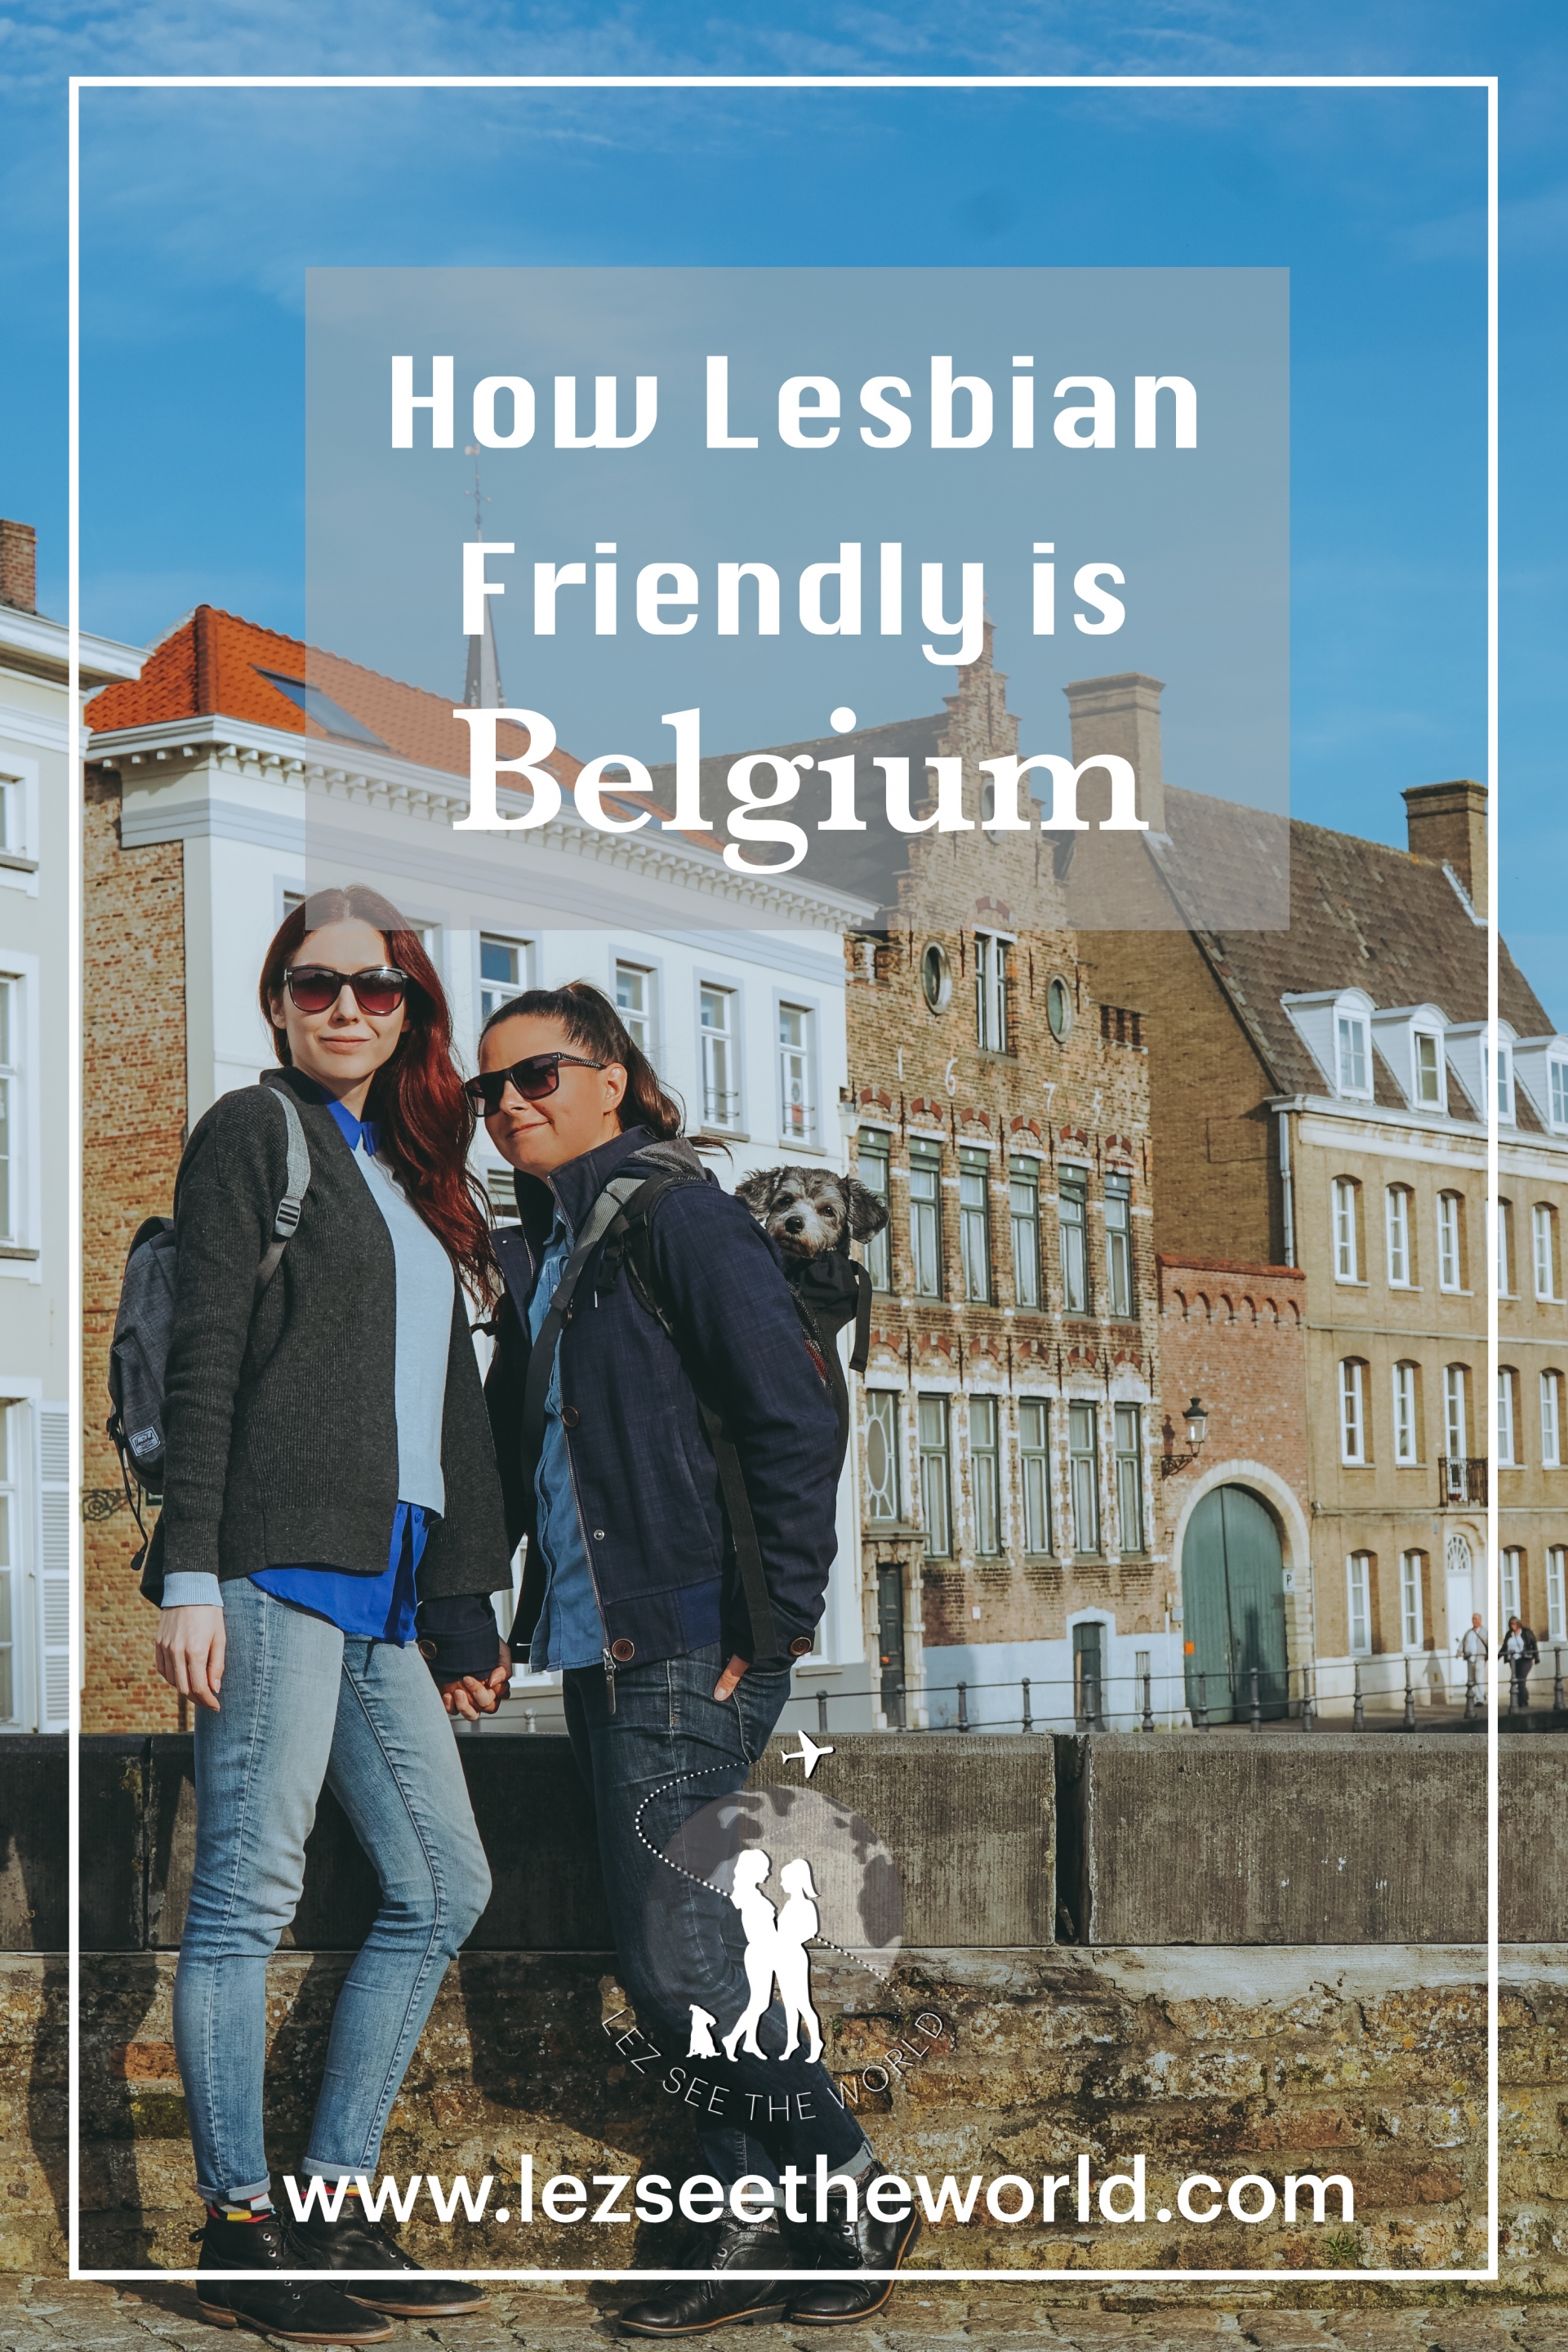 How Lesbian Friendly is Belgium